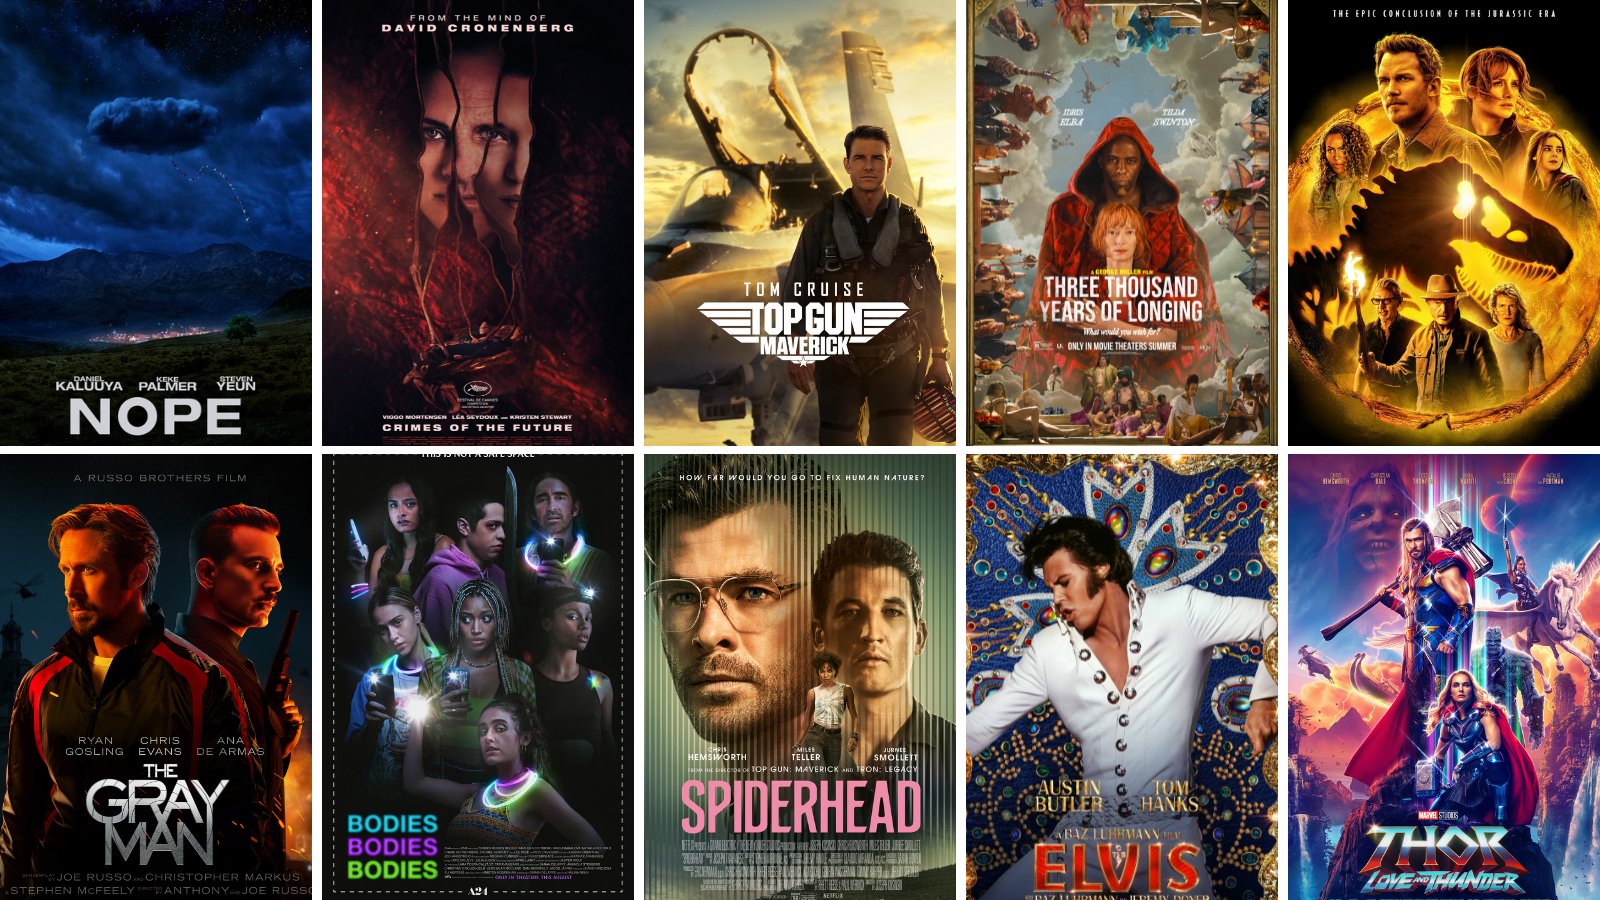 IMDb's 2022 Summer Movie Guide 😎 🎥 / X